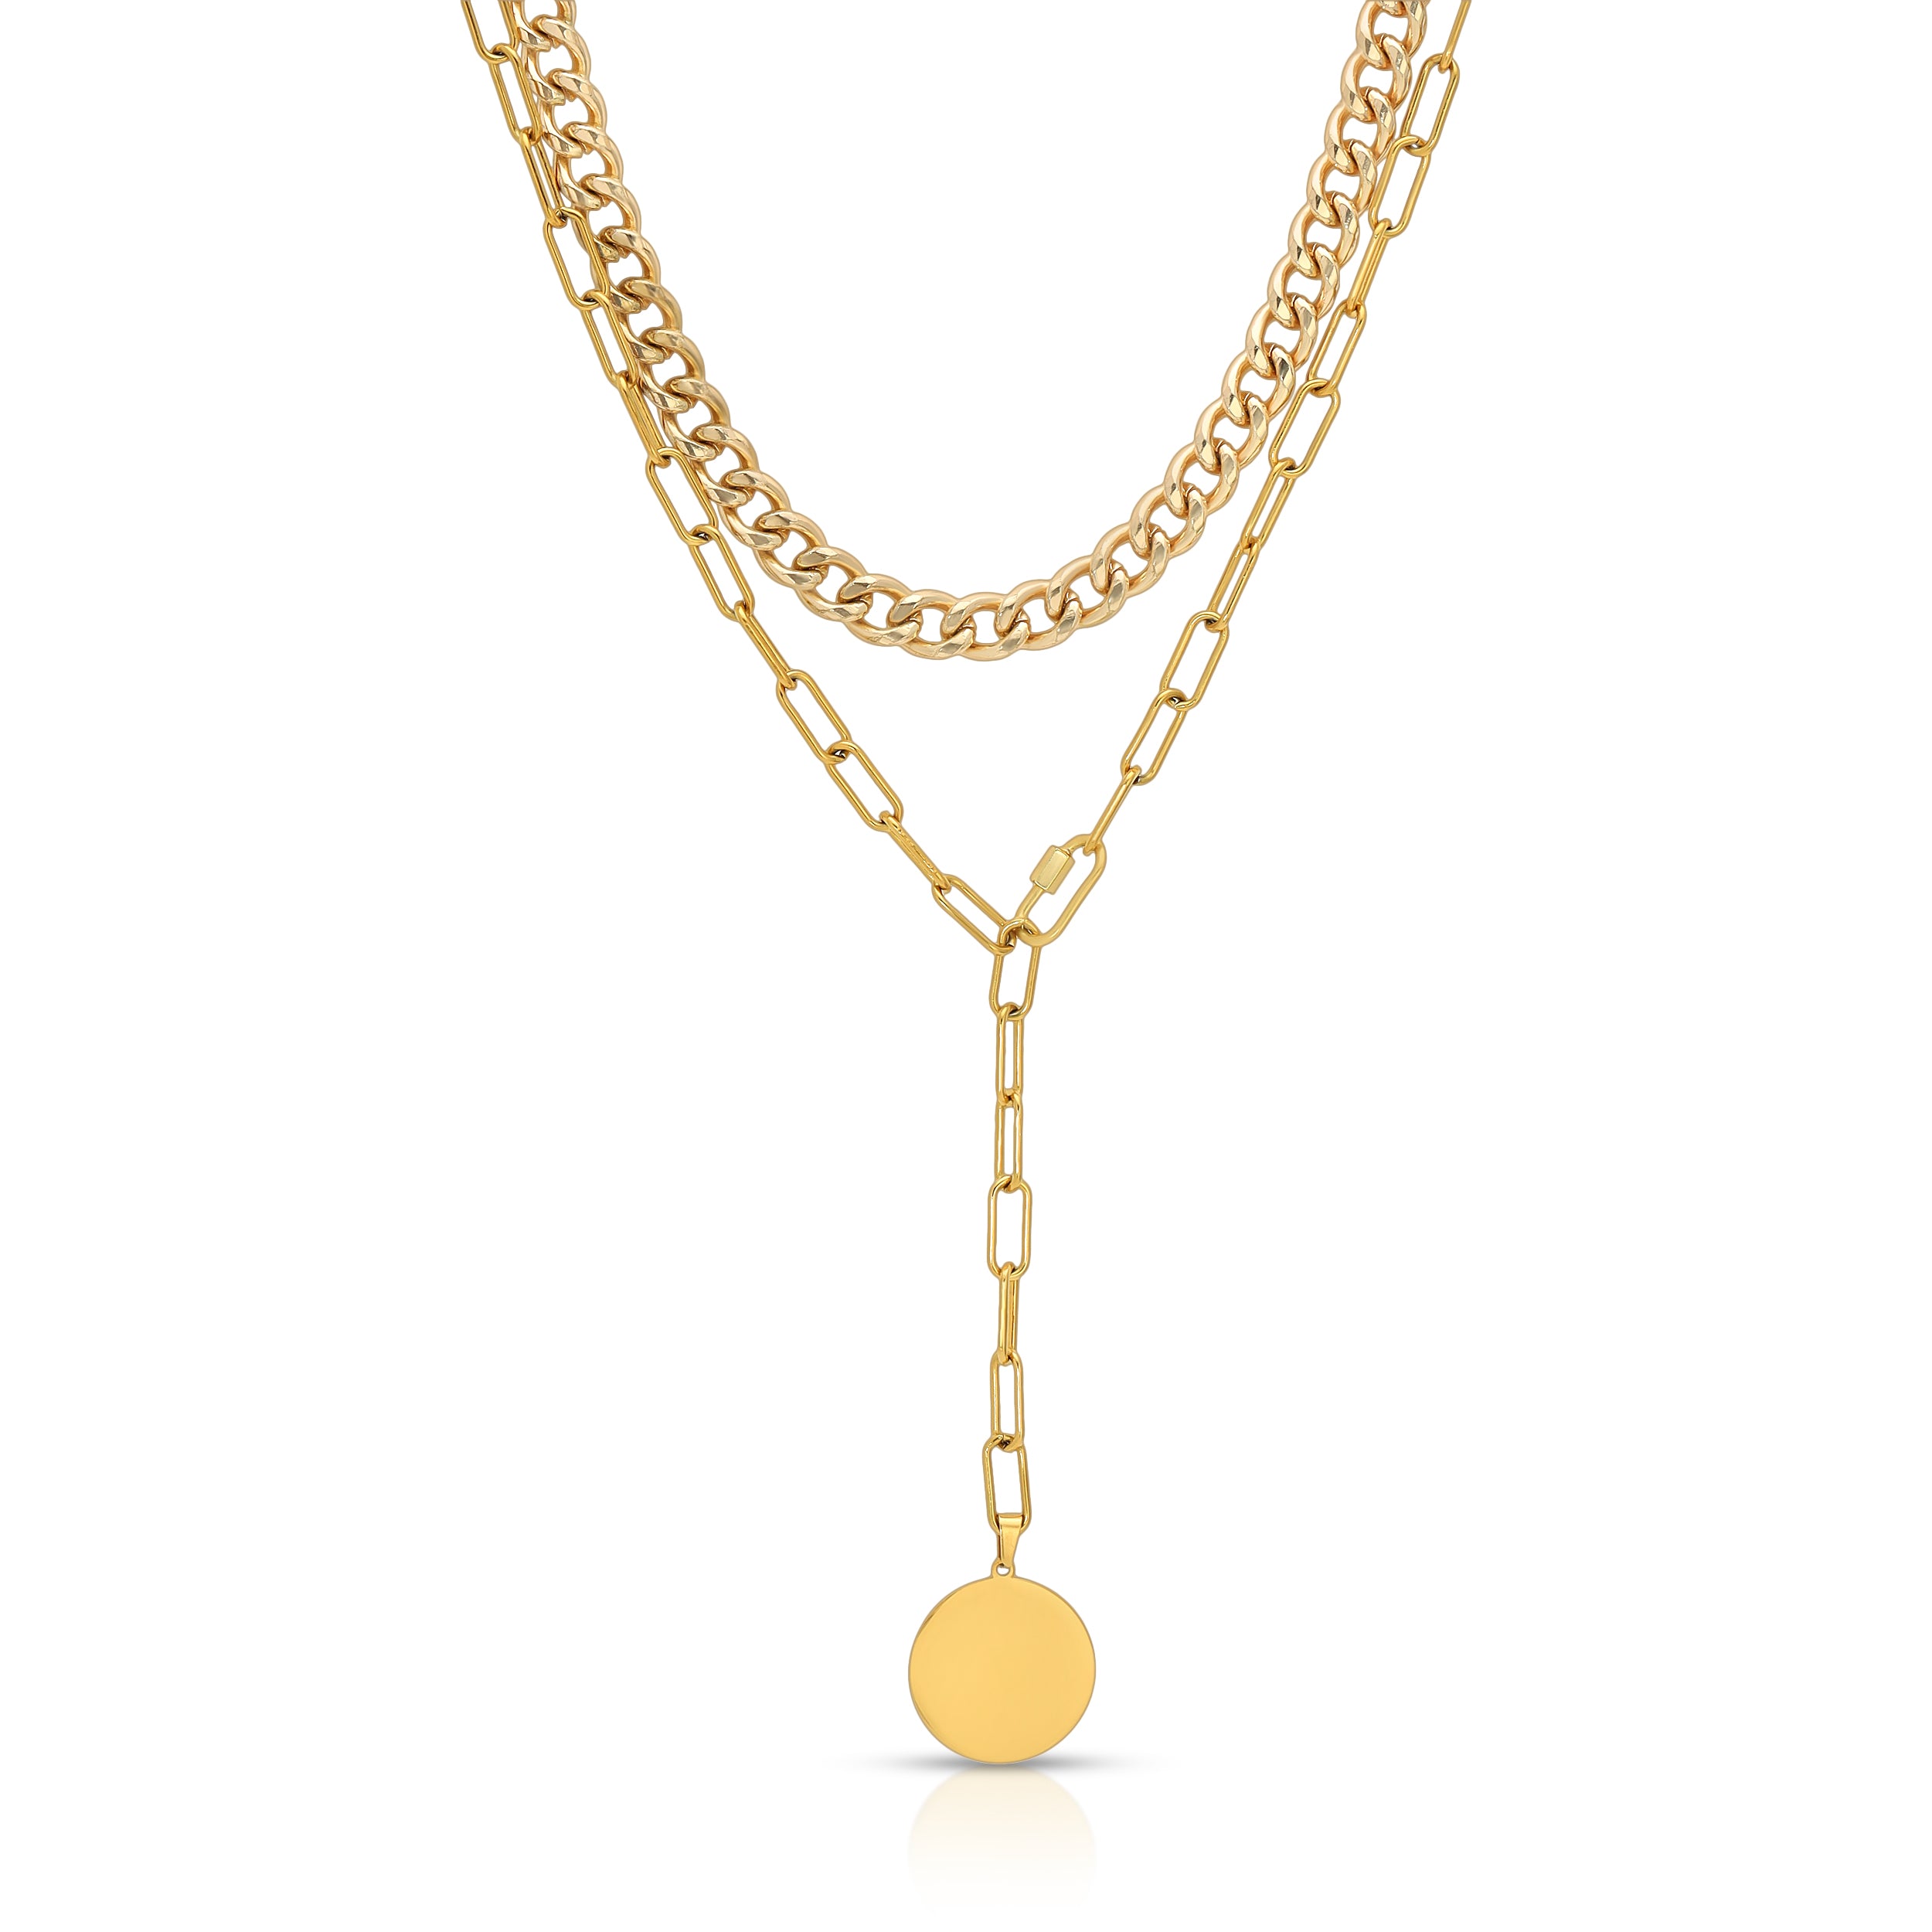 Chain Reaction Shiny Gold Pendant Necklace  | Chain Necklace Women | Chain Reaction Necklace - JaJaara